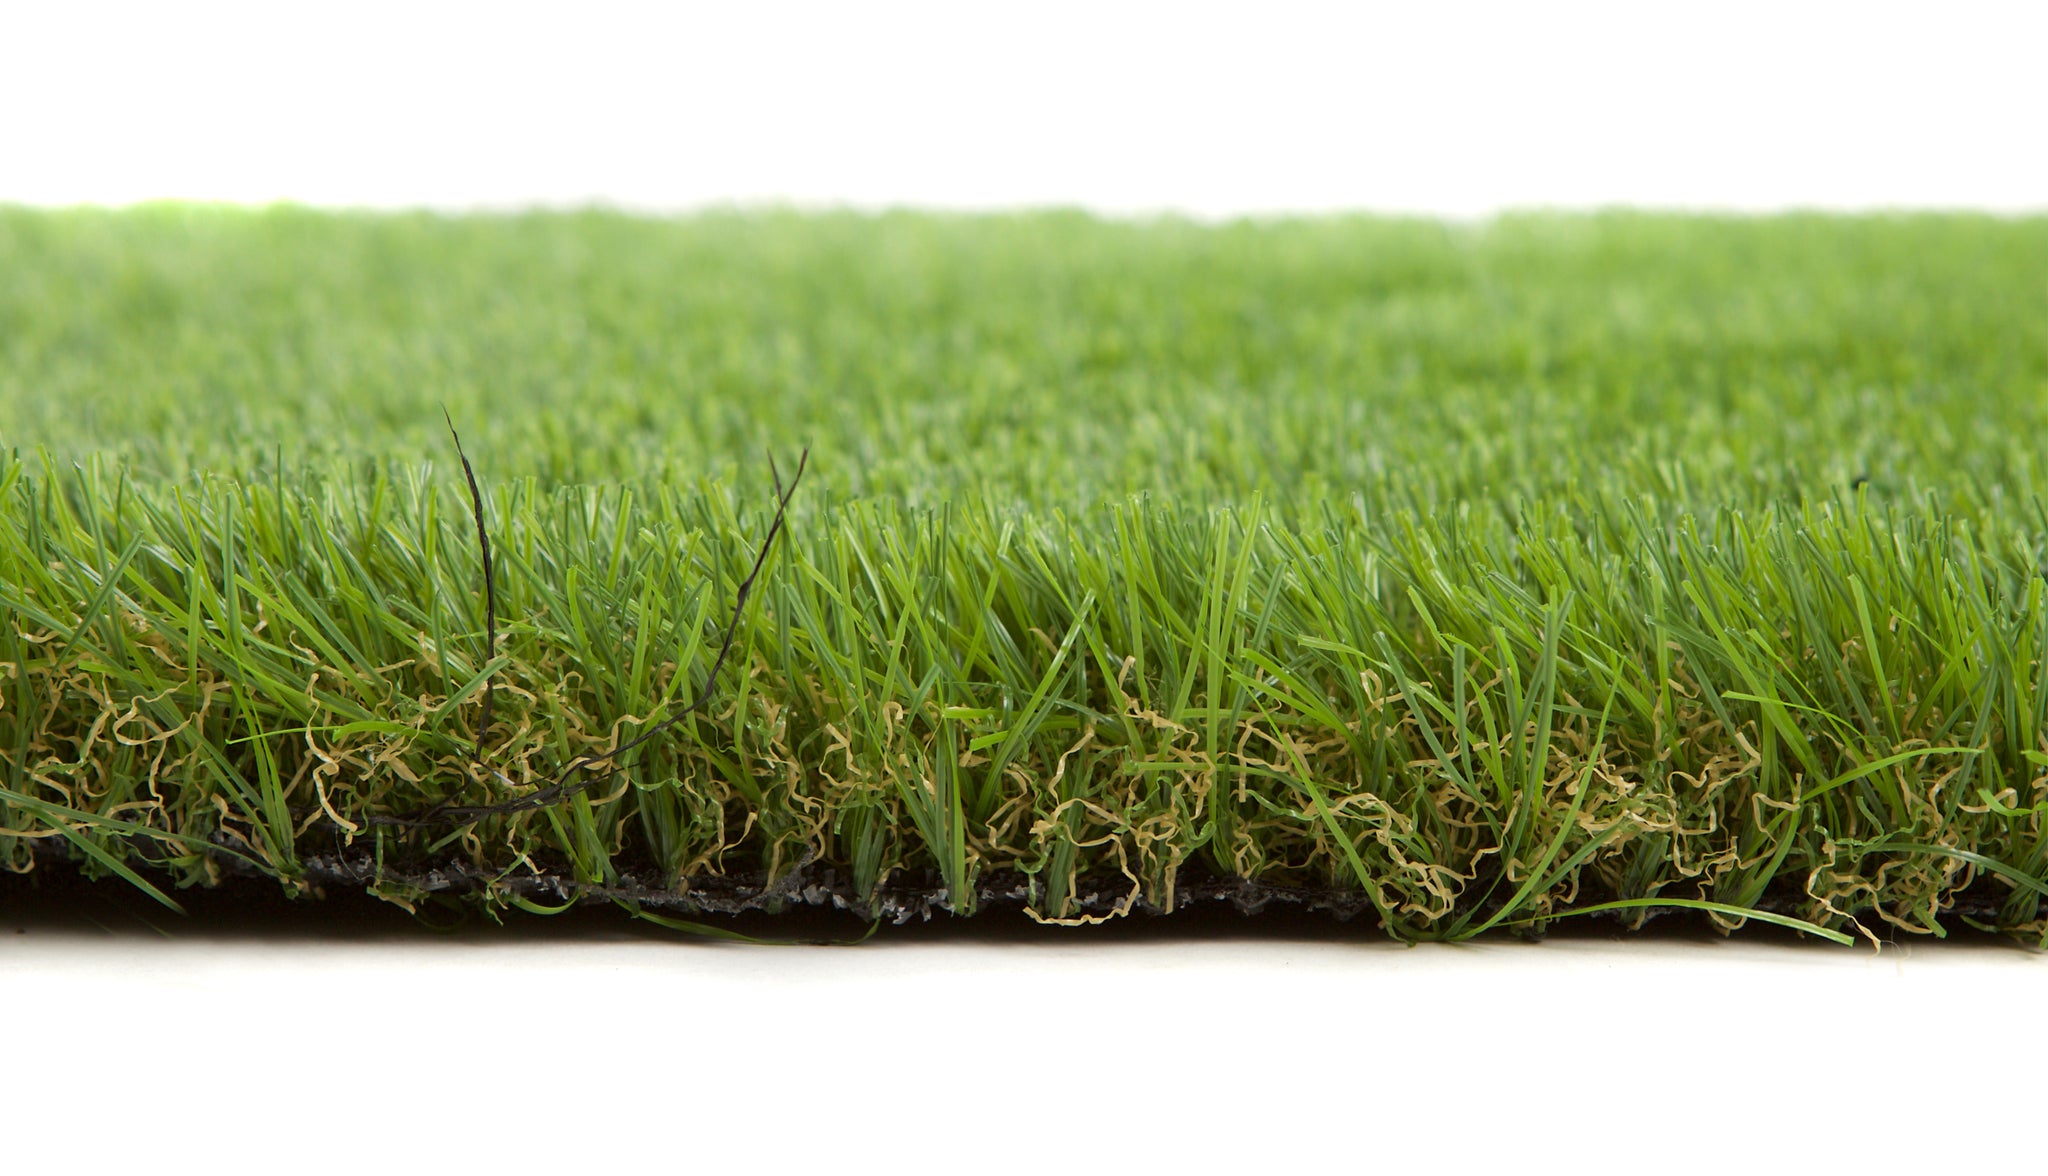 Miami Artificial Grass